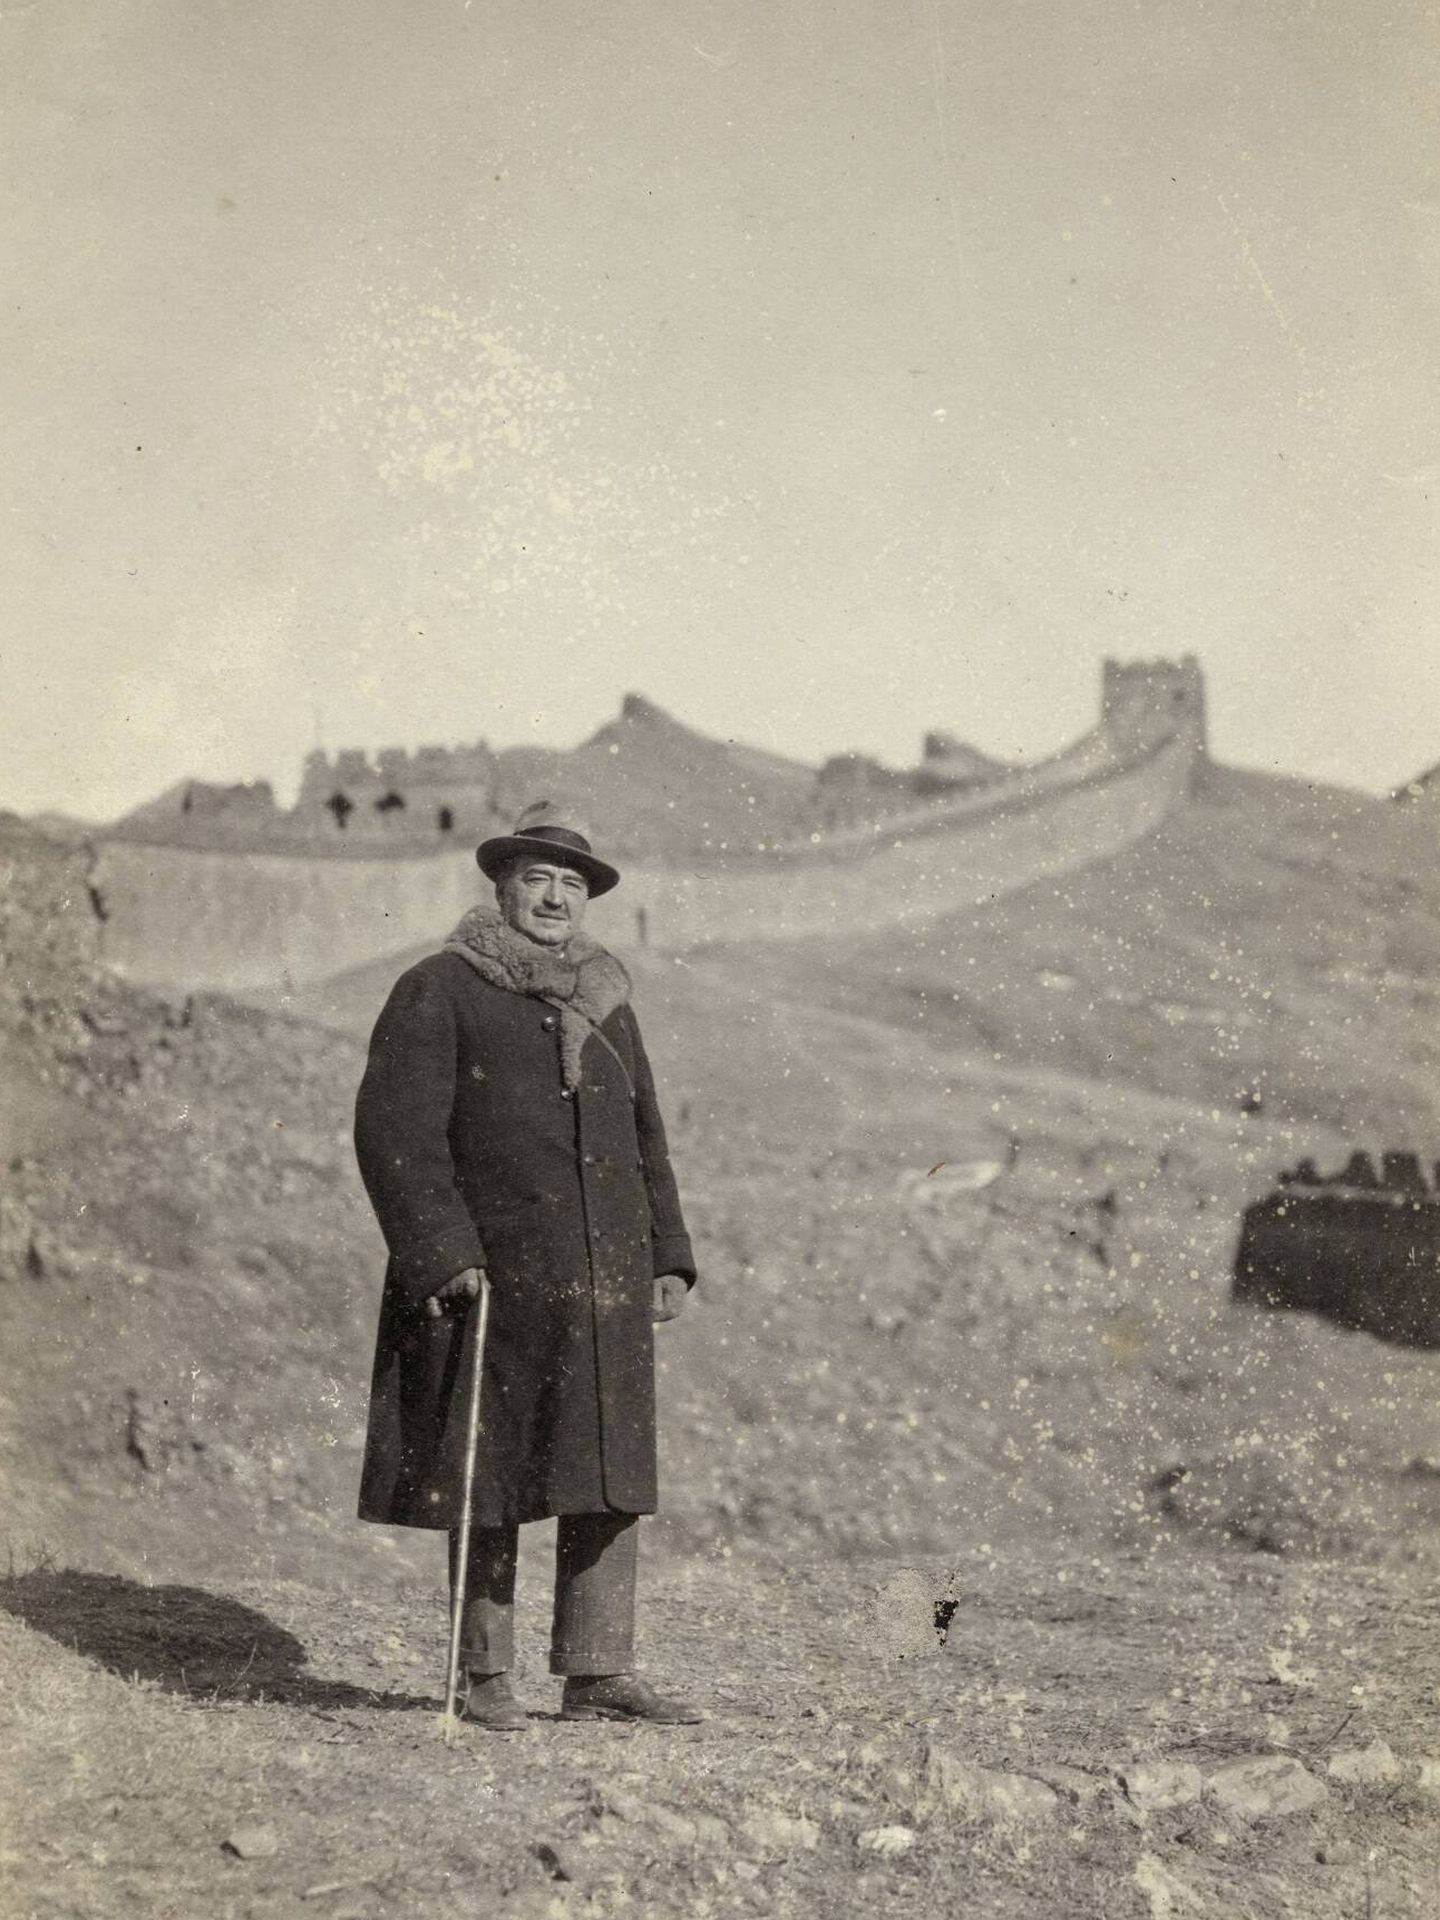 Blasco en la Gran Muralla China, 1924. (Foto: Museo Blasco Ibáñez Valencia)